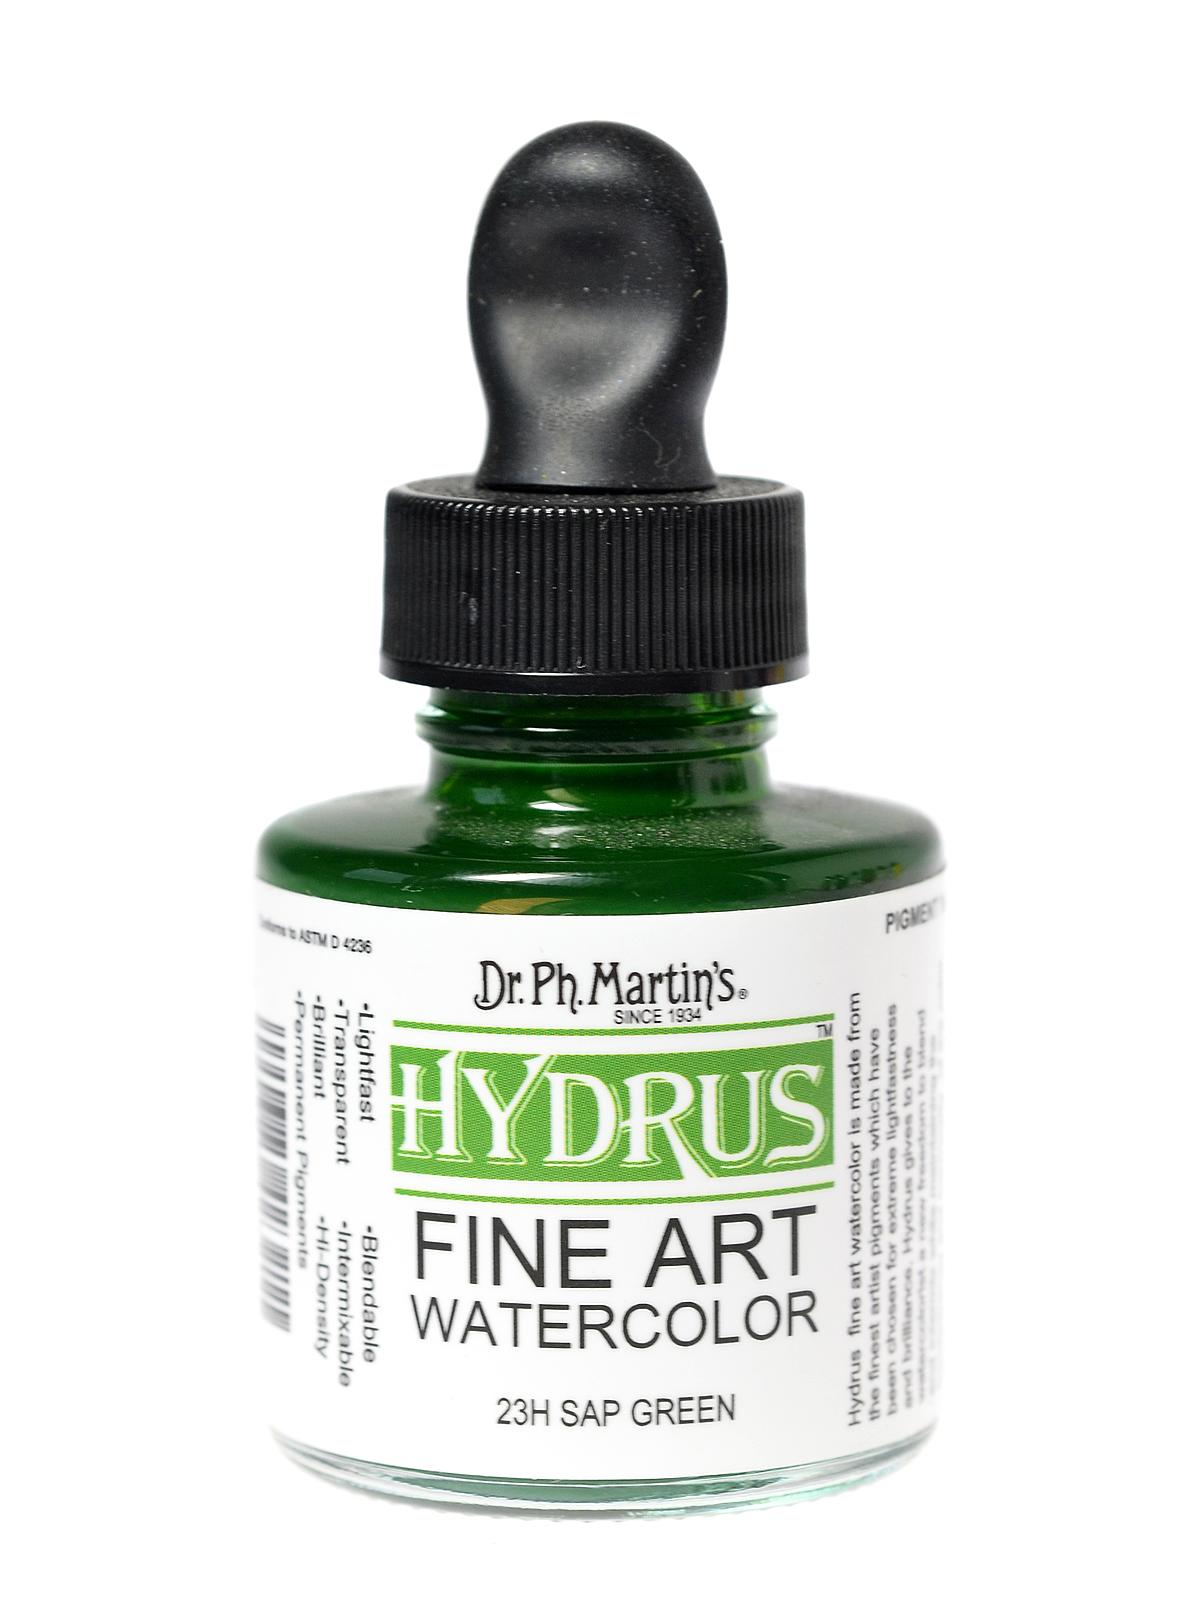 Hydrus Fine Art Watercolor Sap Green